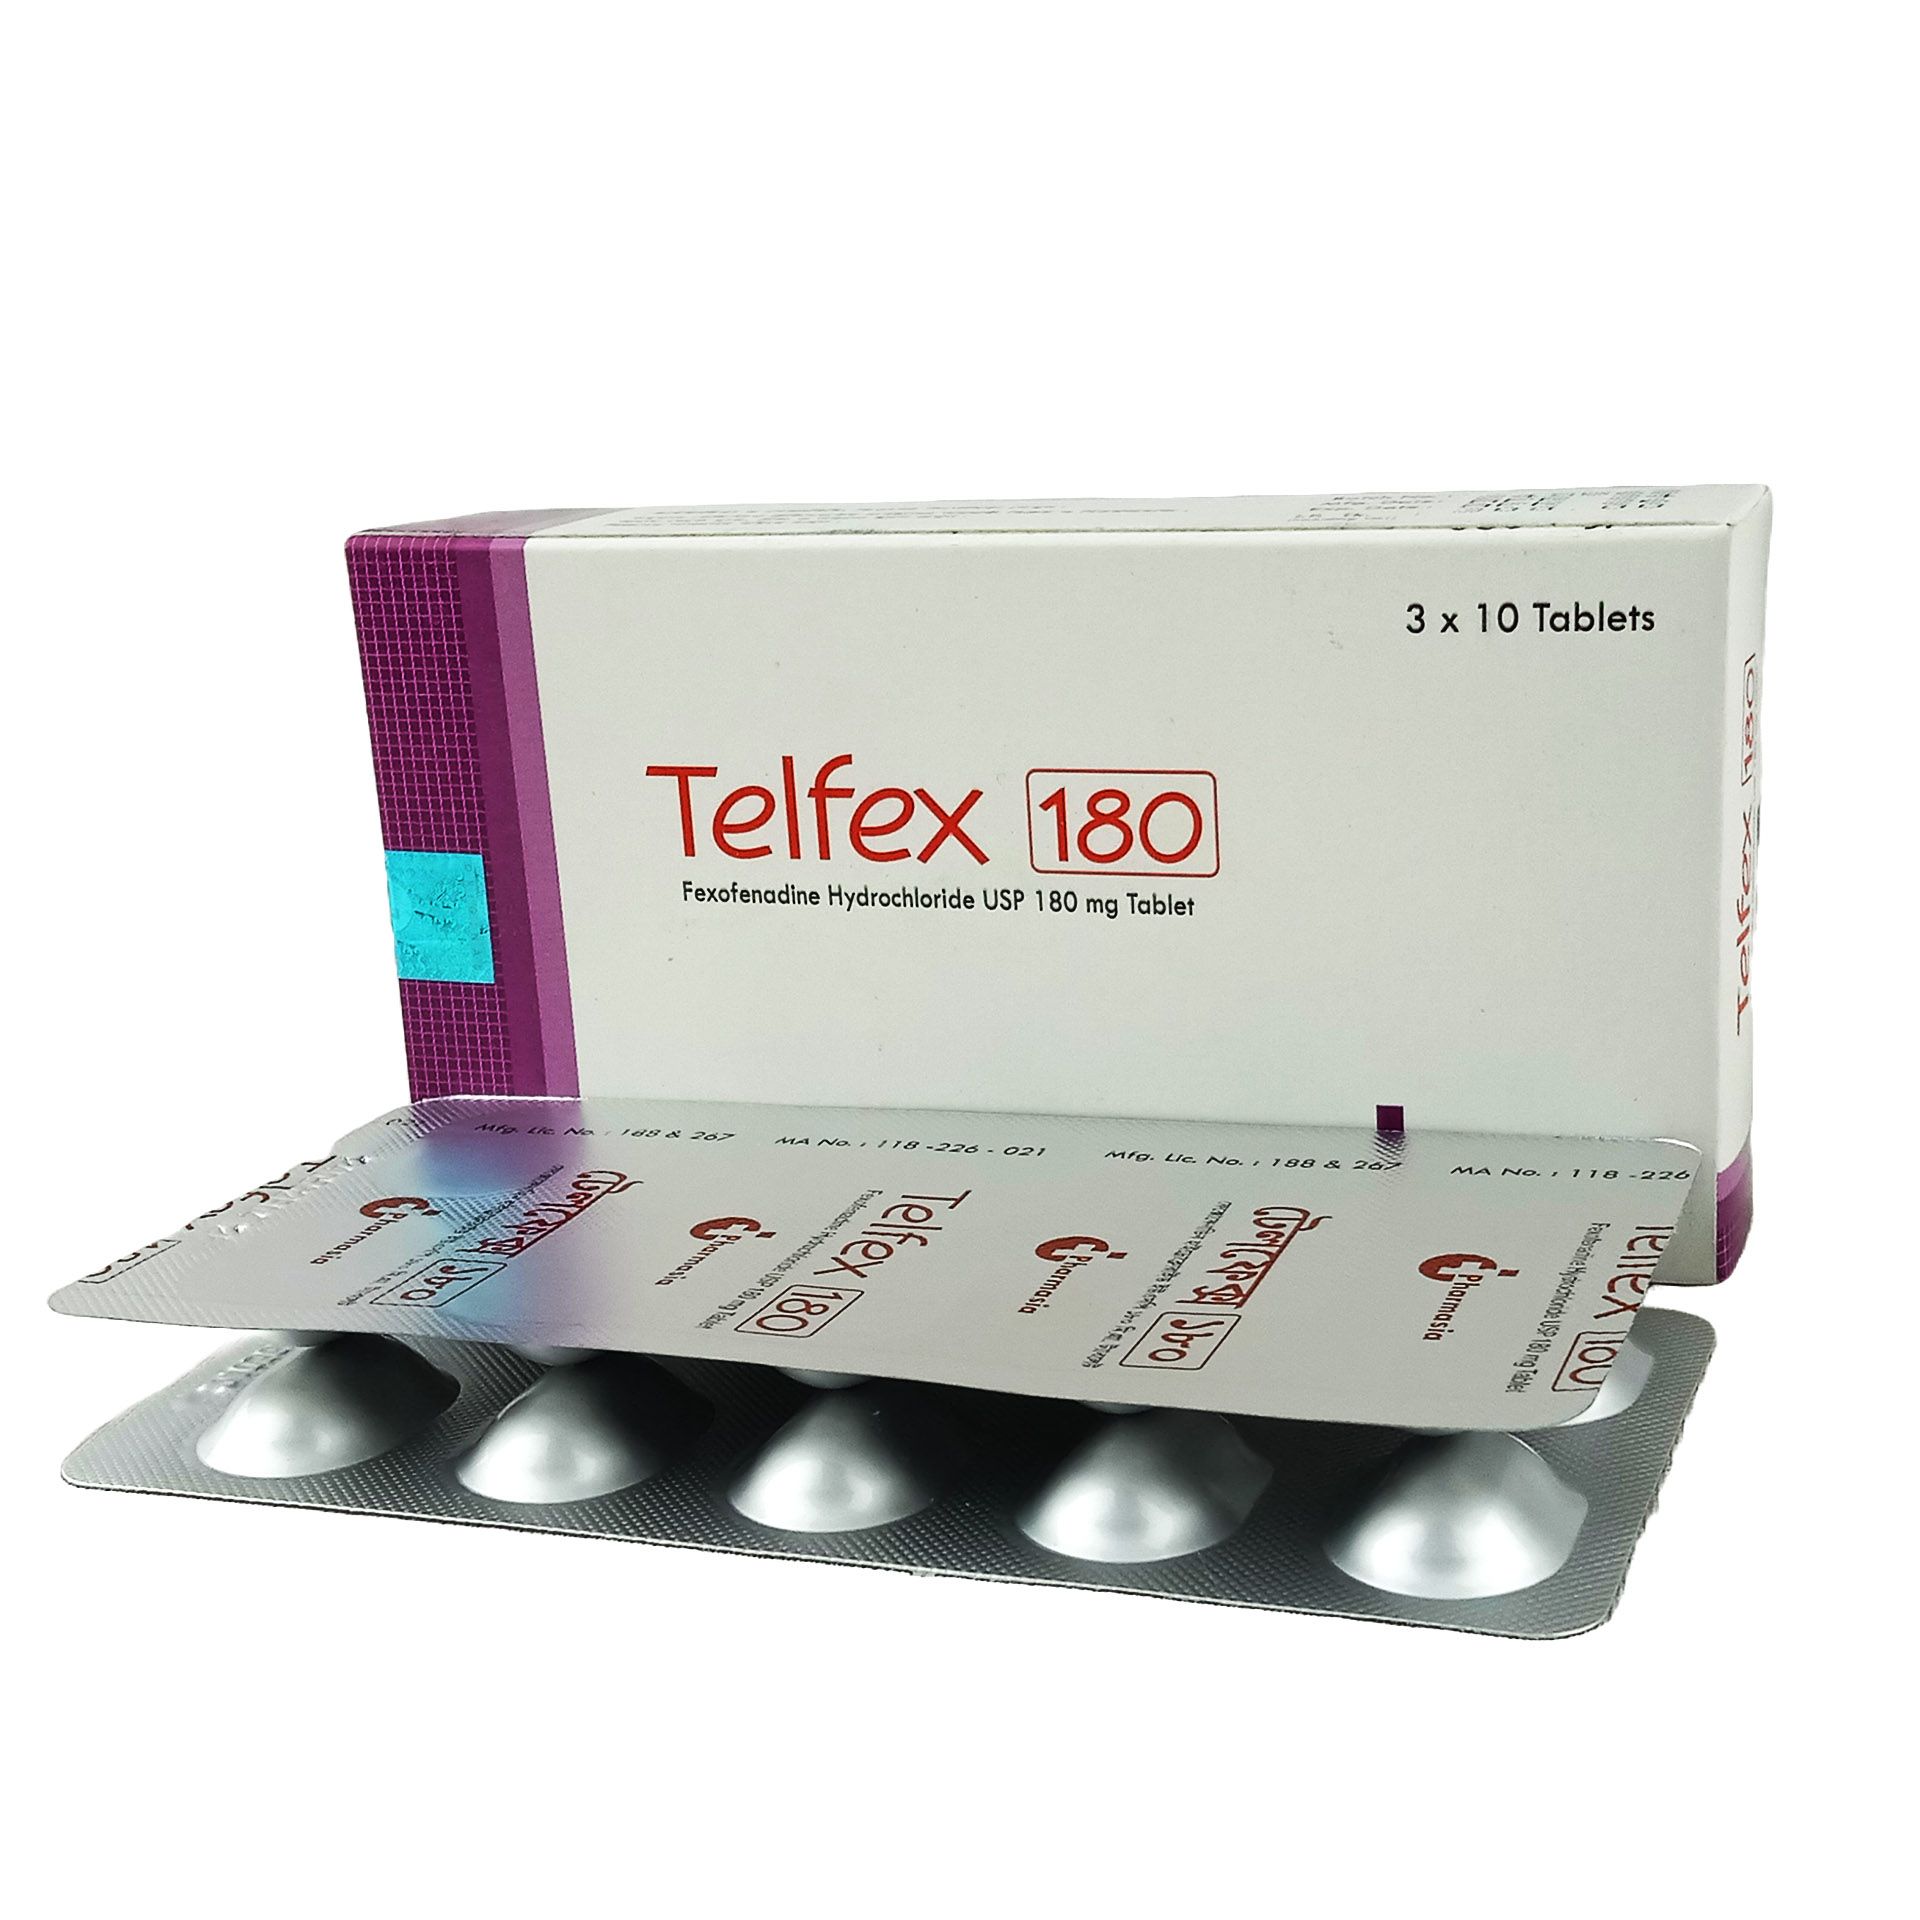 Telfex 180mg tablet